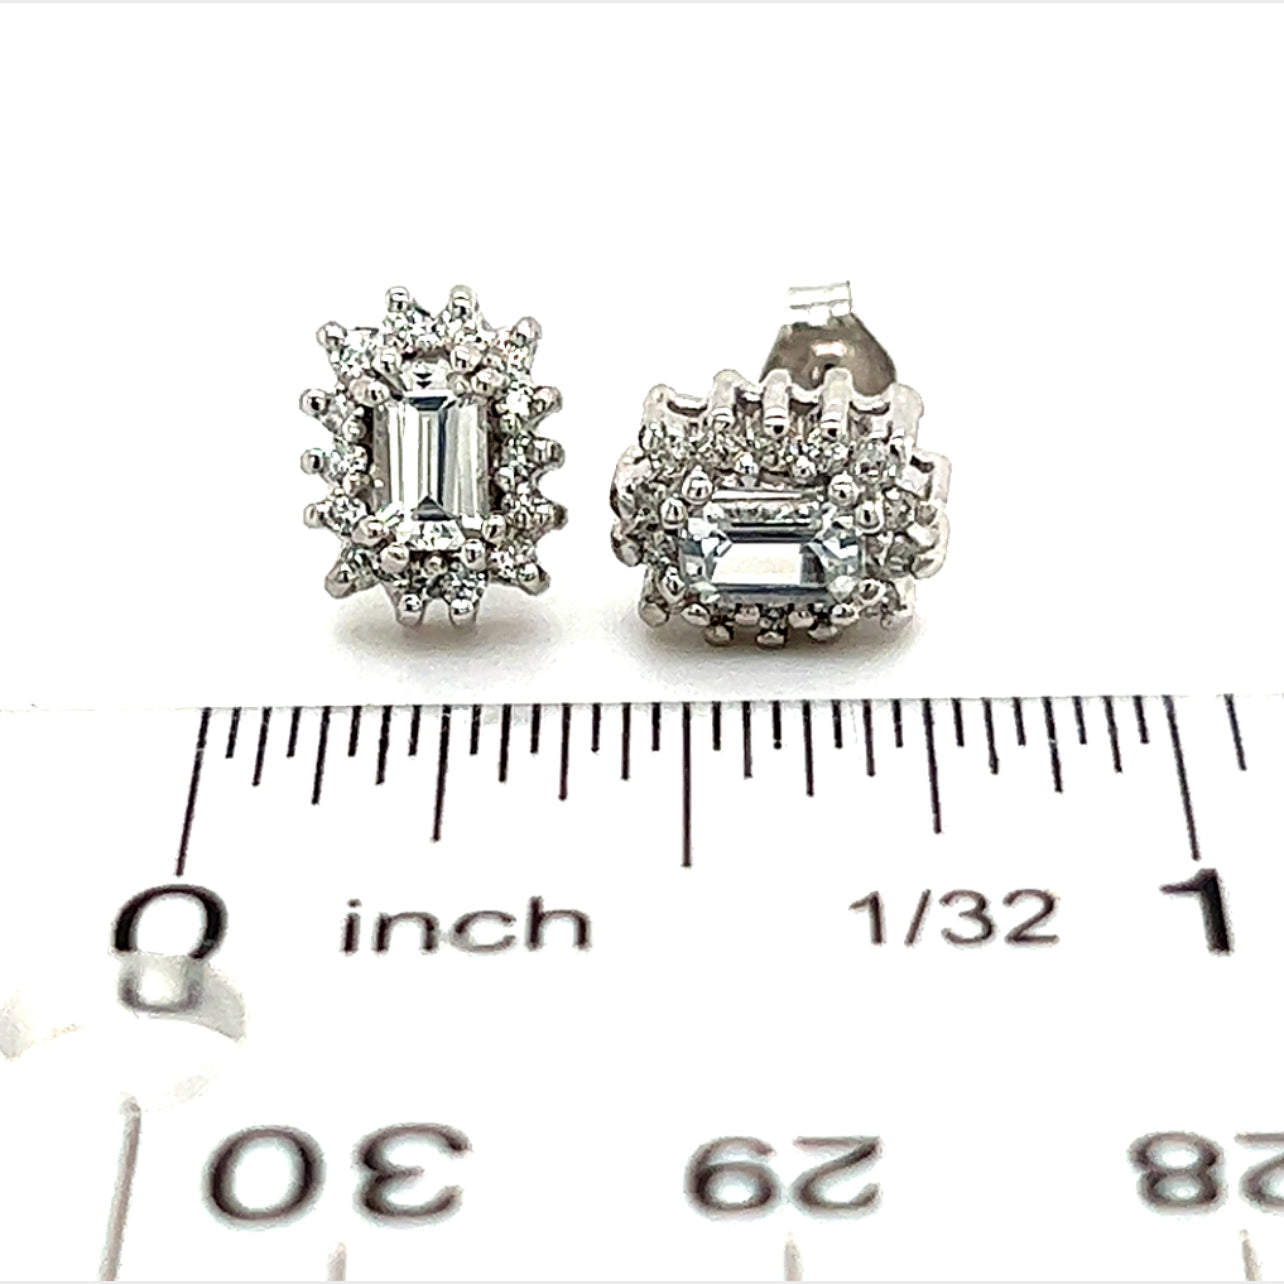 Natural Sapphire Diamond Stud Earrings 14k W Gold 0.94 TCW Certified $2950 121267 - Certified Estate Jewelry